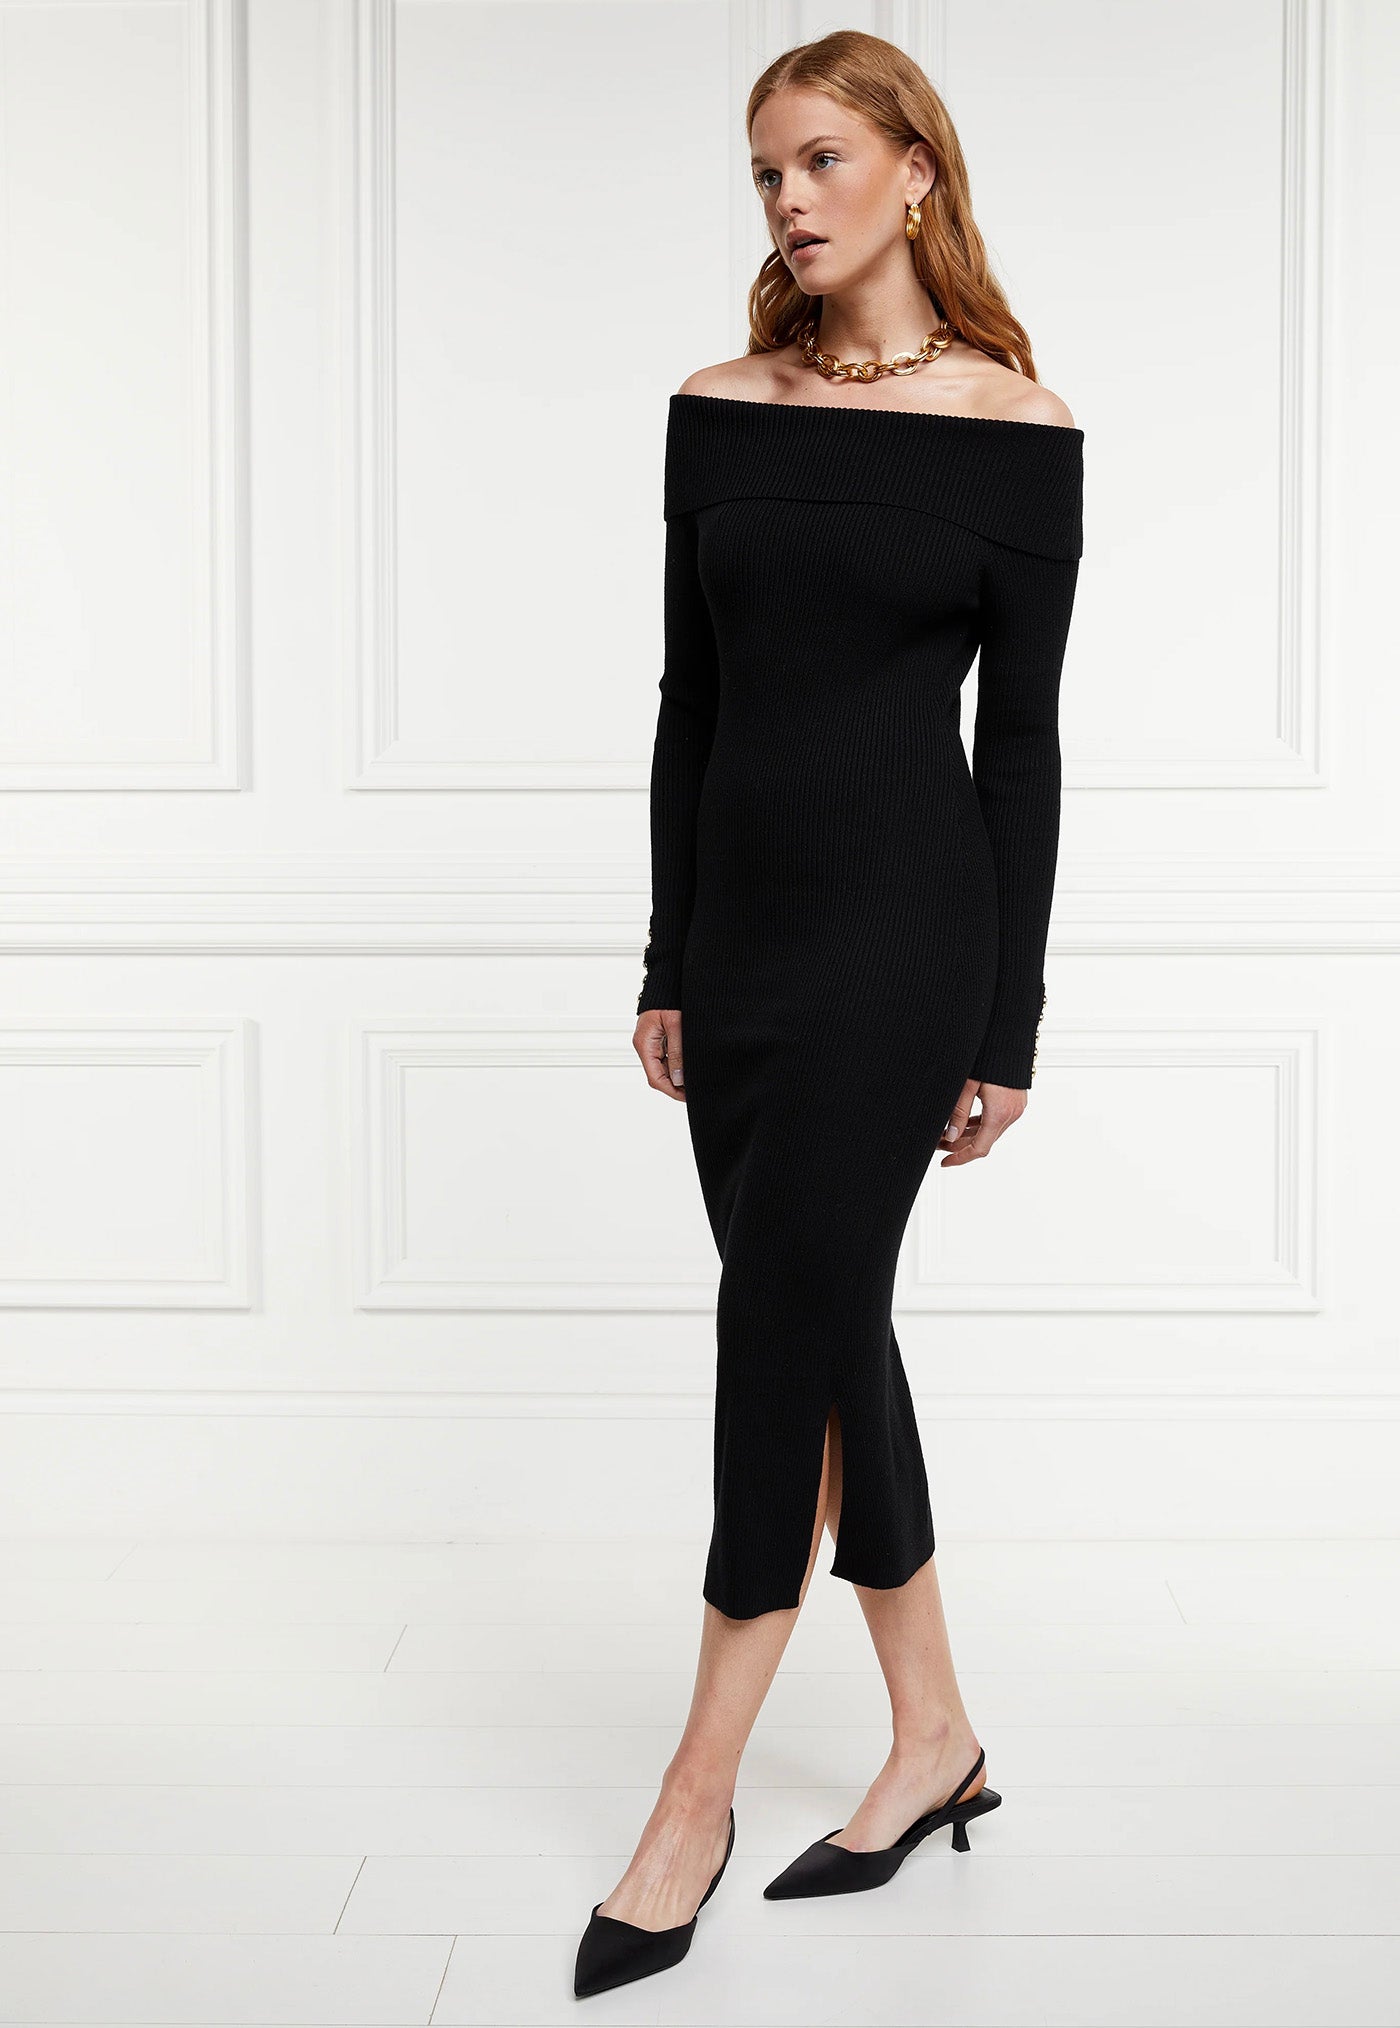 Bardot Midi Dress - Black sold by Angel Divine